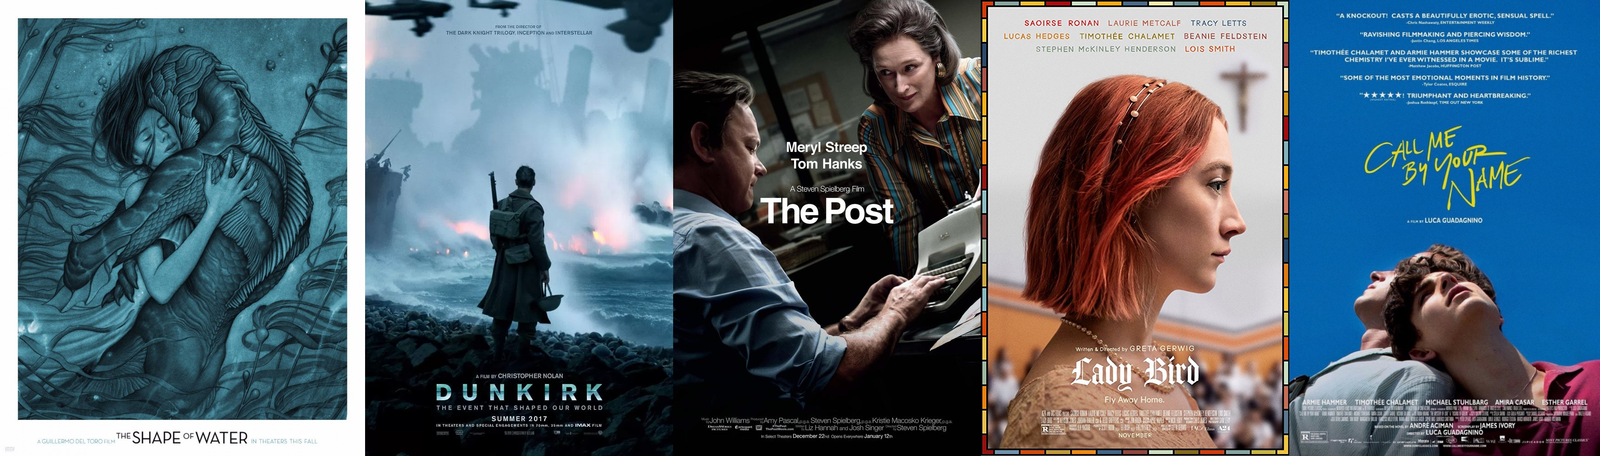 Fantasy Romantic Drama The Shape of Water Guillermo del Toro Leads Critics' Choice Awards Nominations - Movies, Critics choice awards, Nomination, Film Awards, Longpost